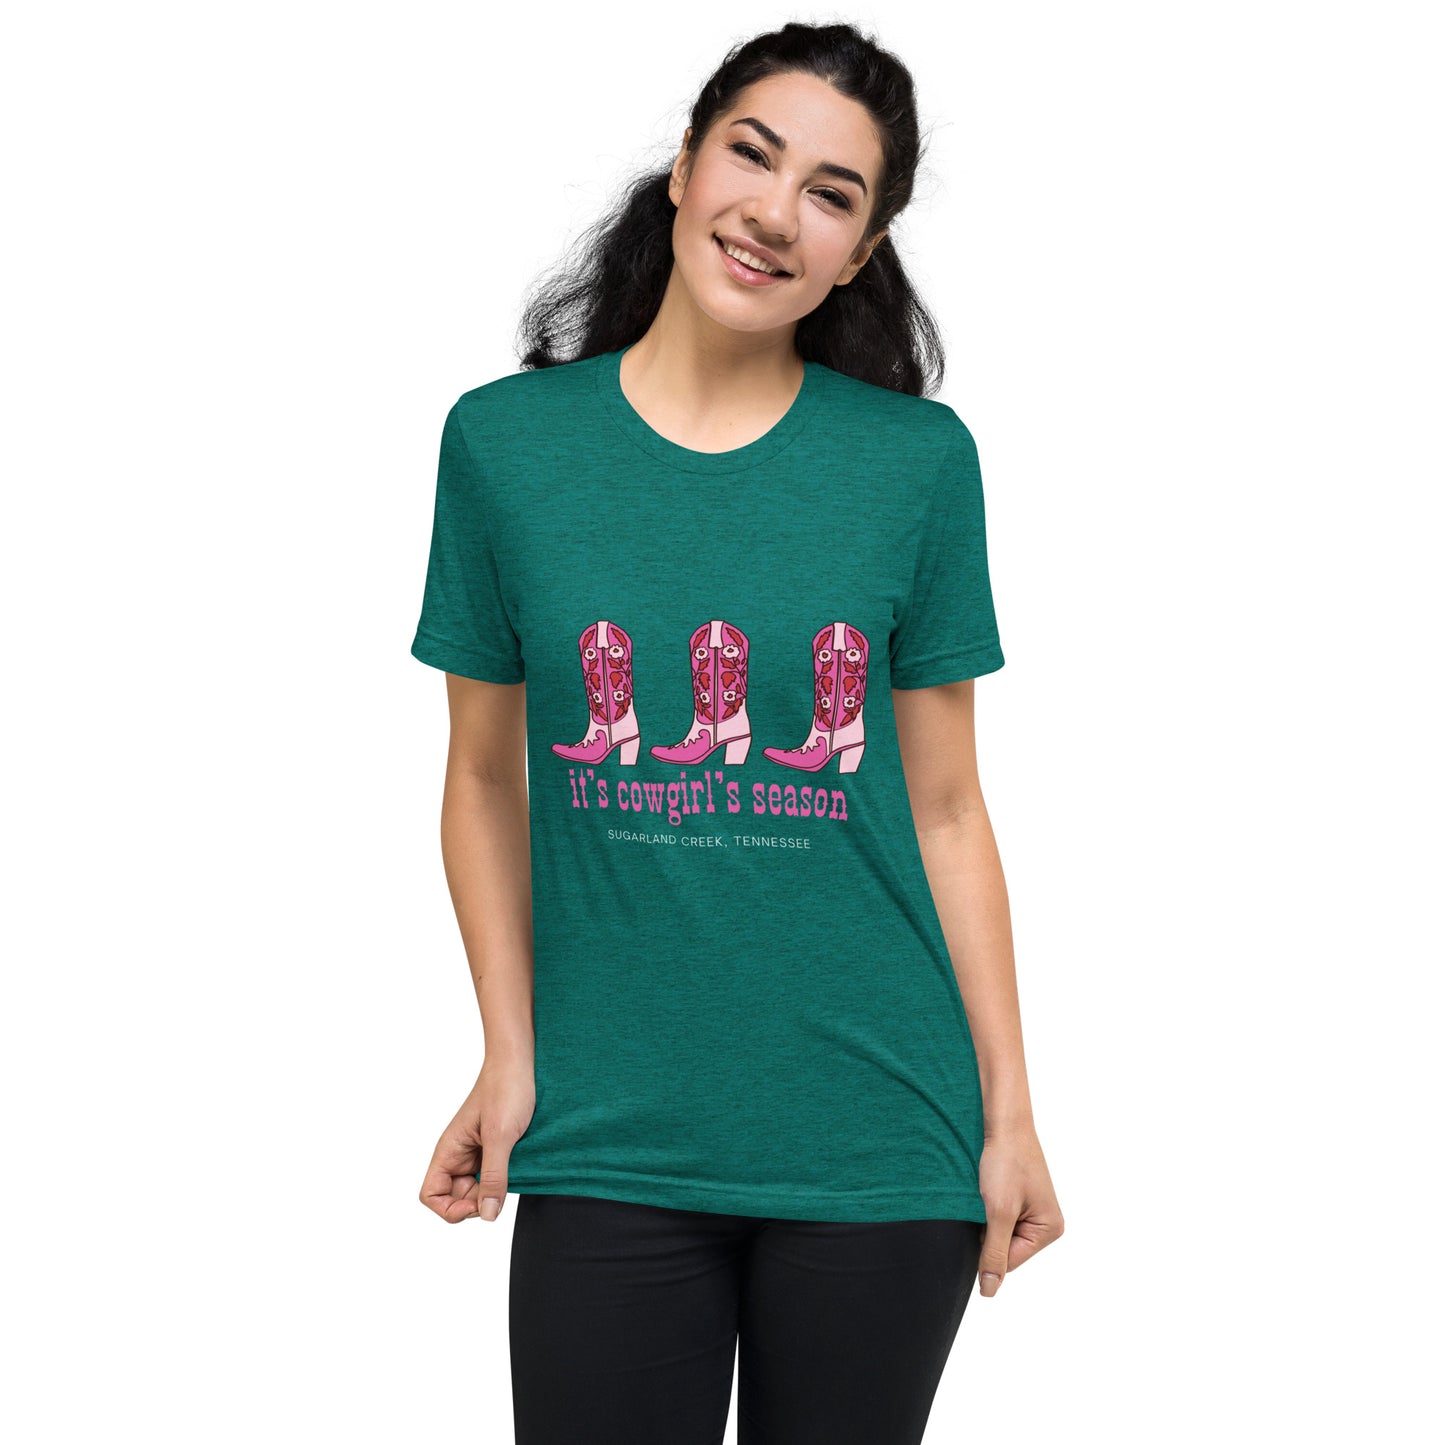 "It's Cowgirl's Season" Unisex Triblend T-shirt